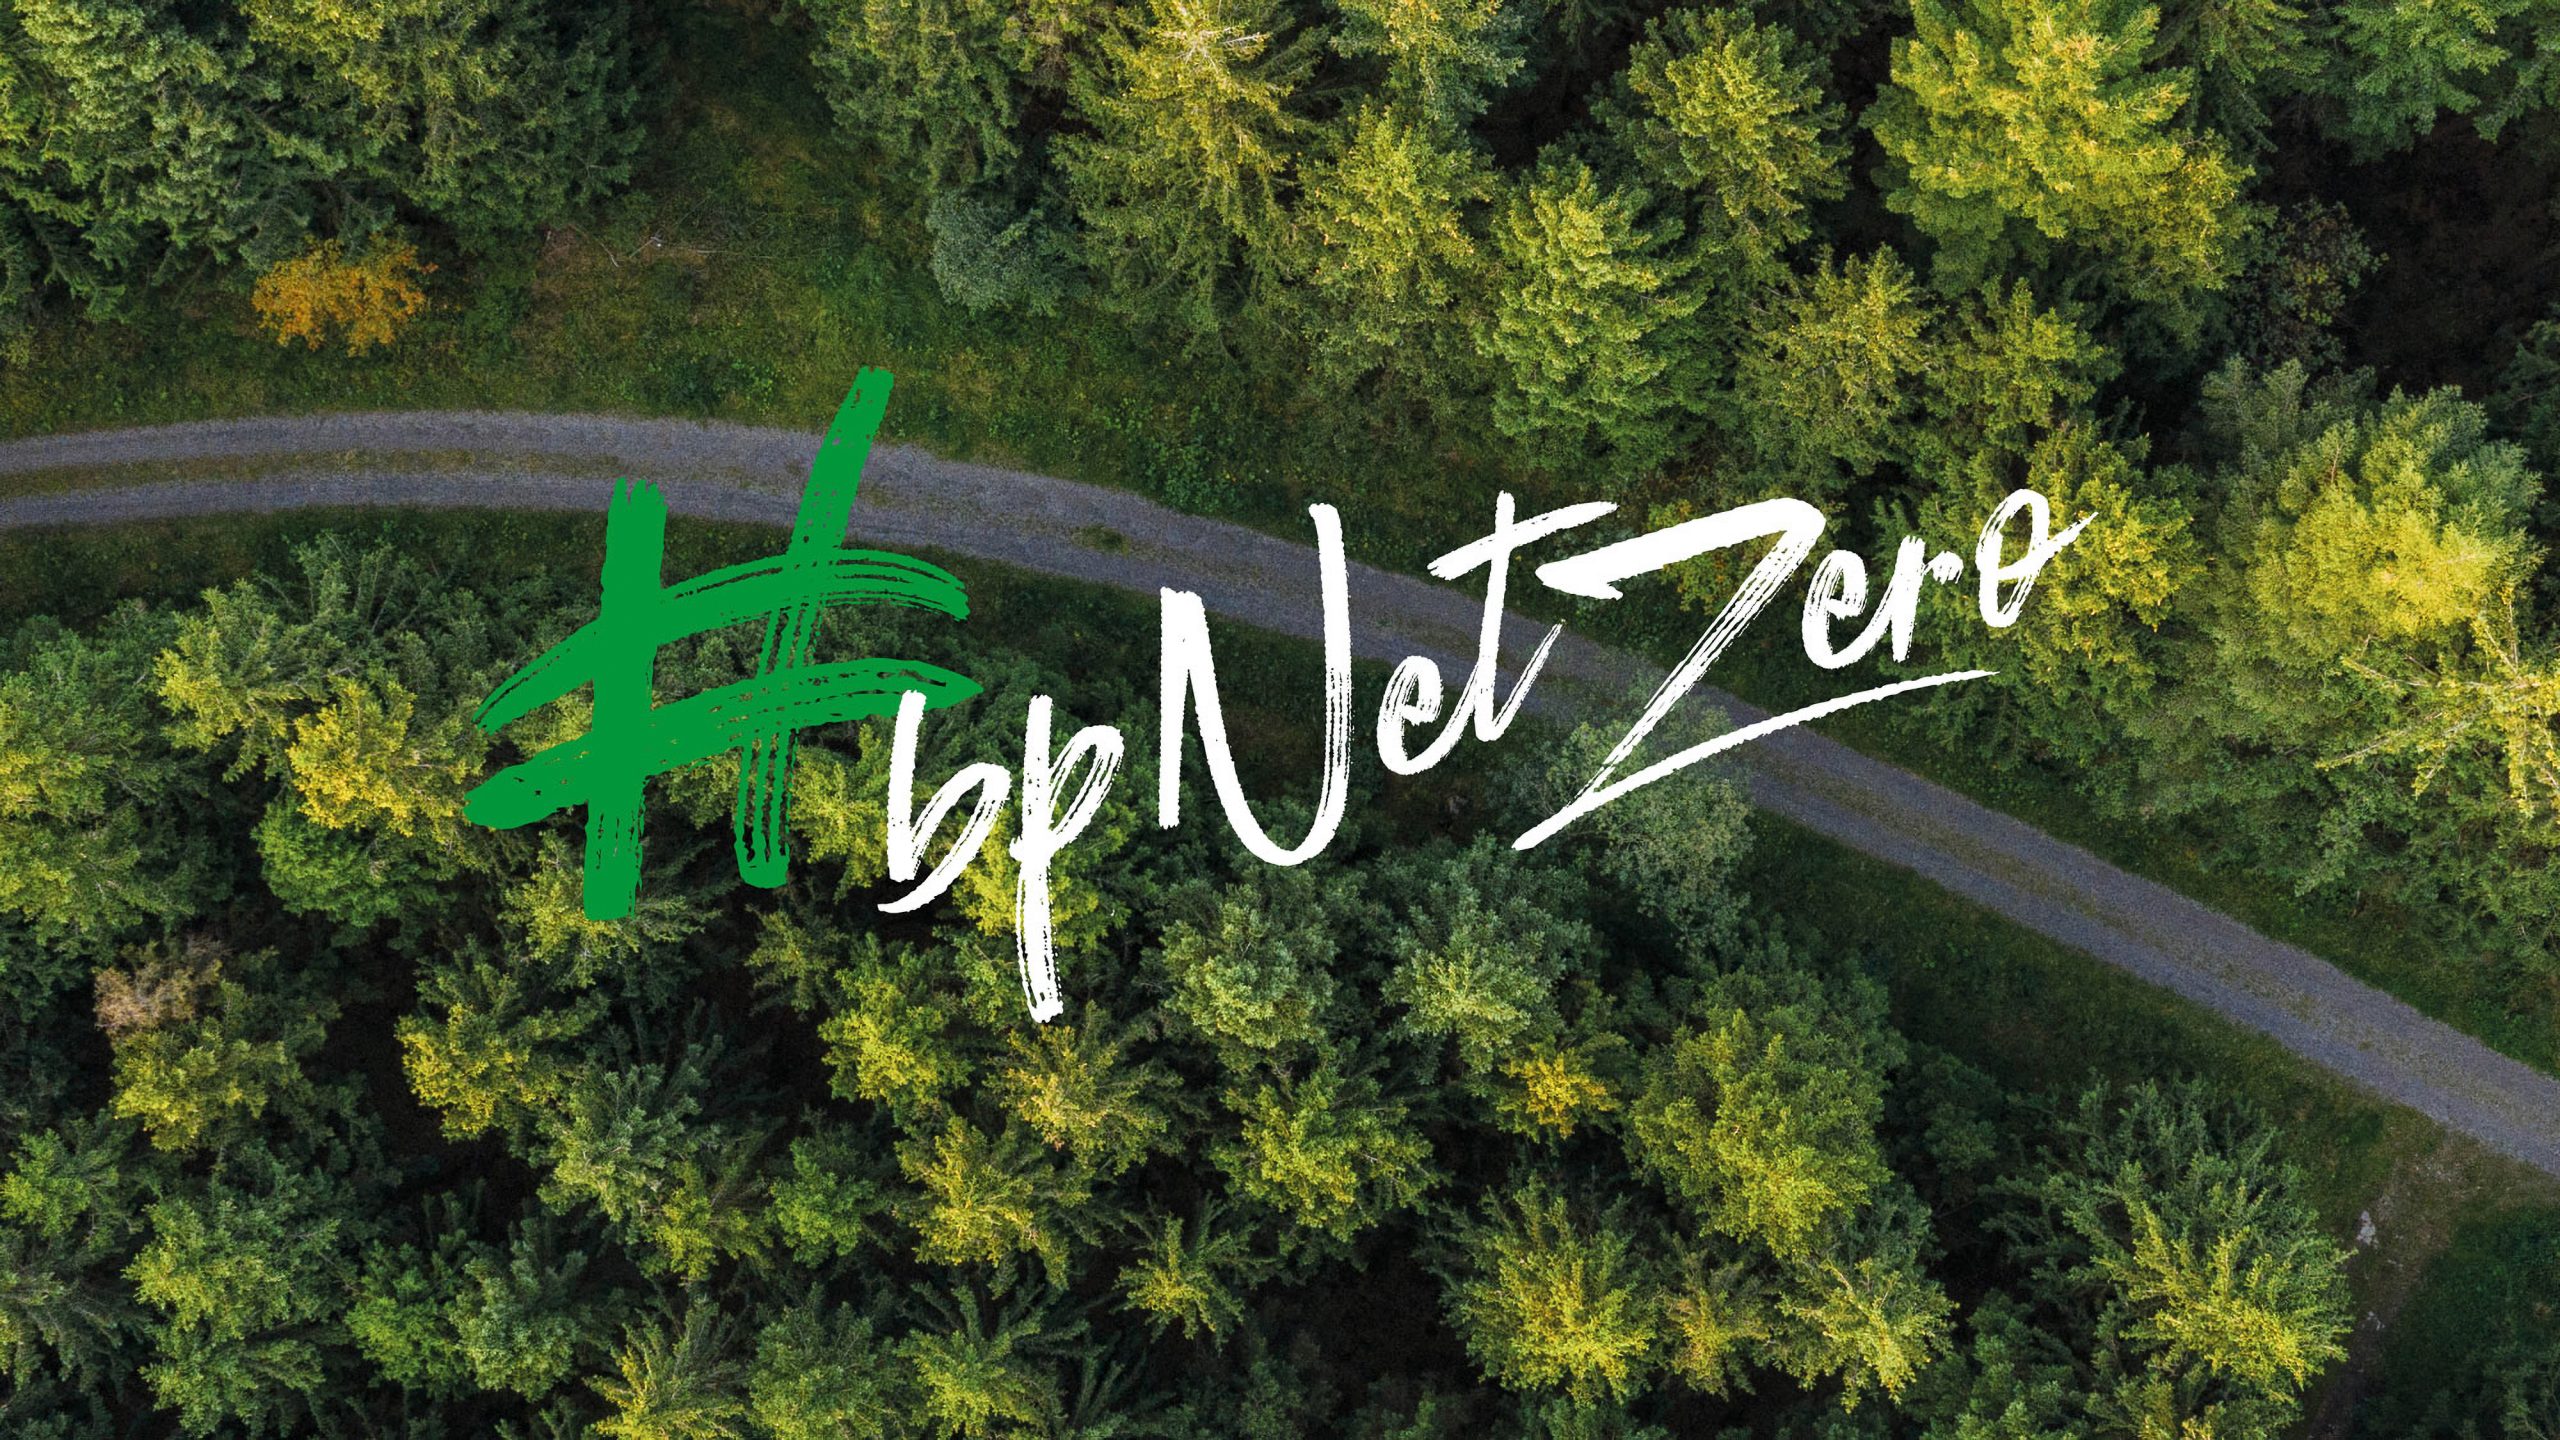 BP licenses Sam Parrett's Better Times for Net Zero Campaign